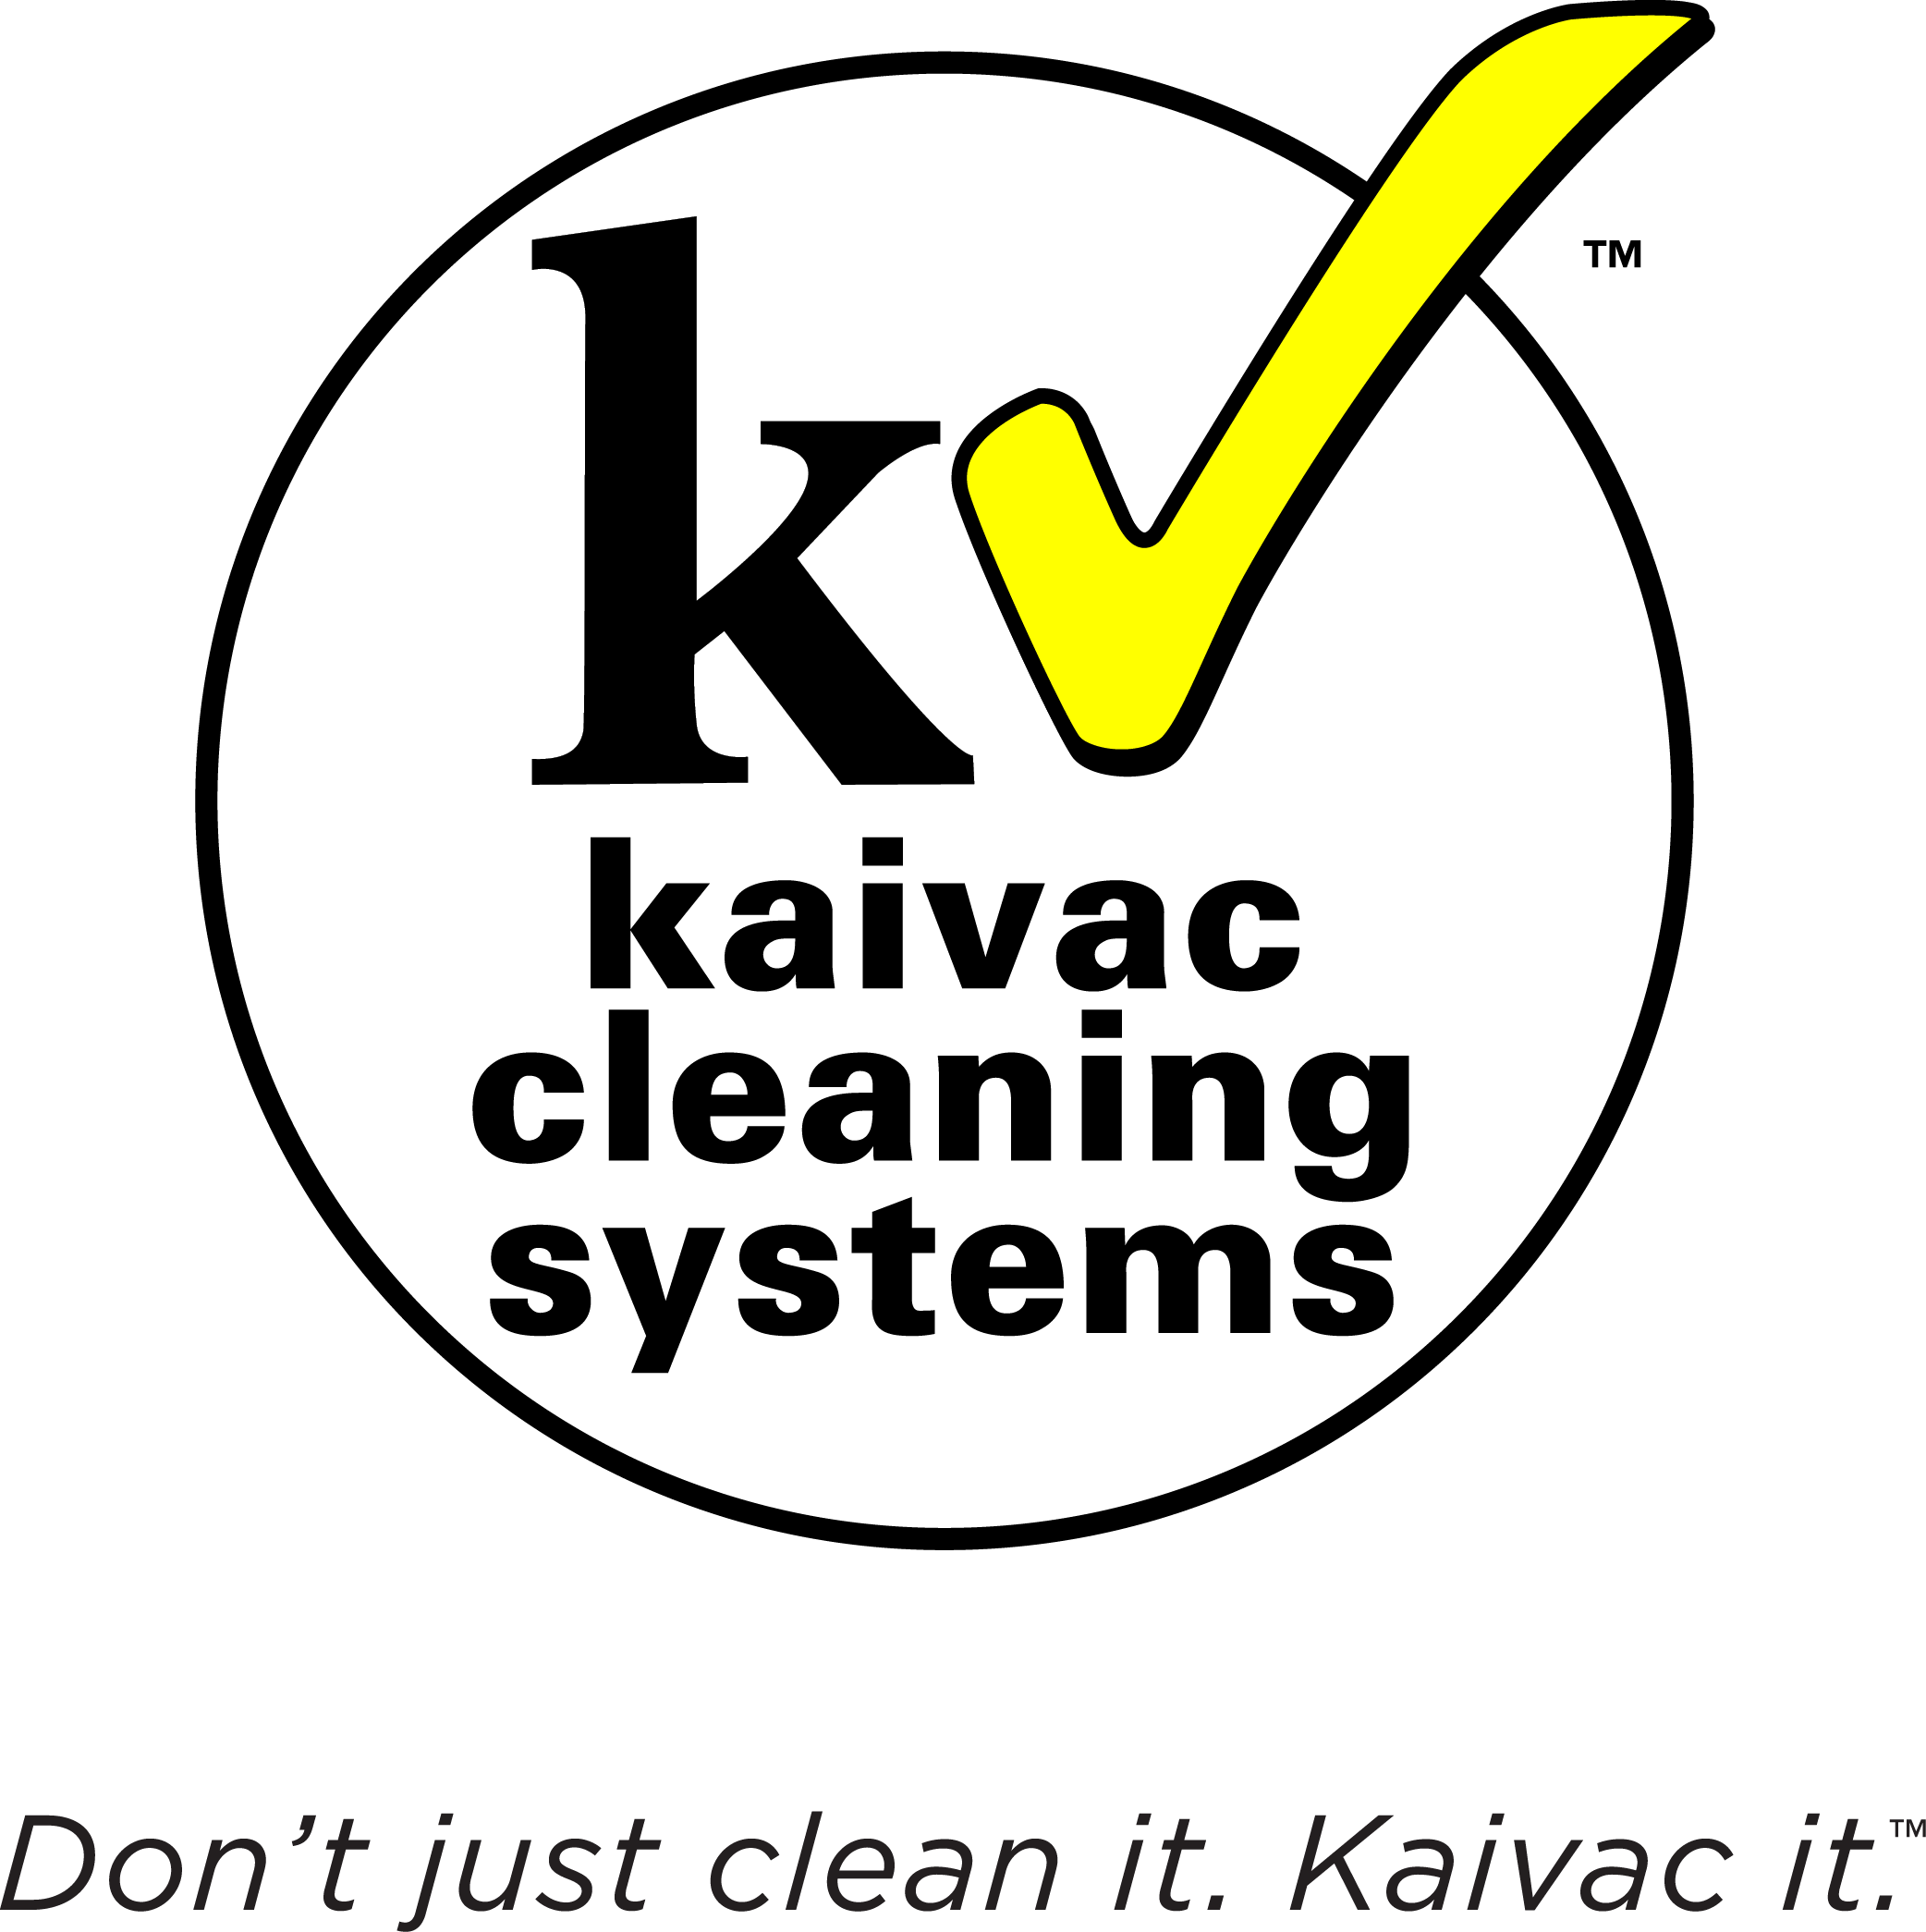 Kaivac logo